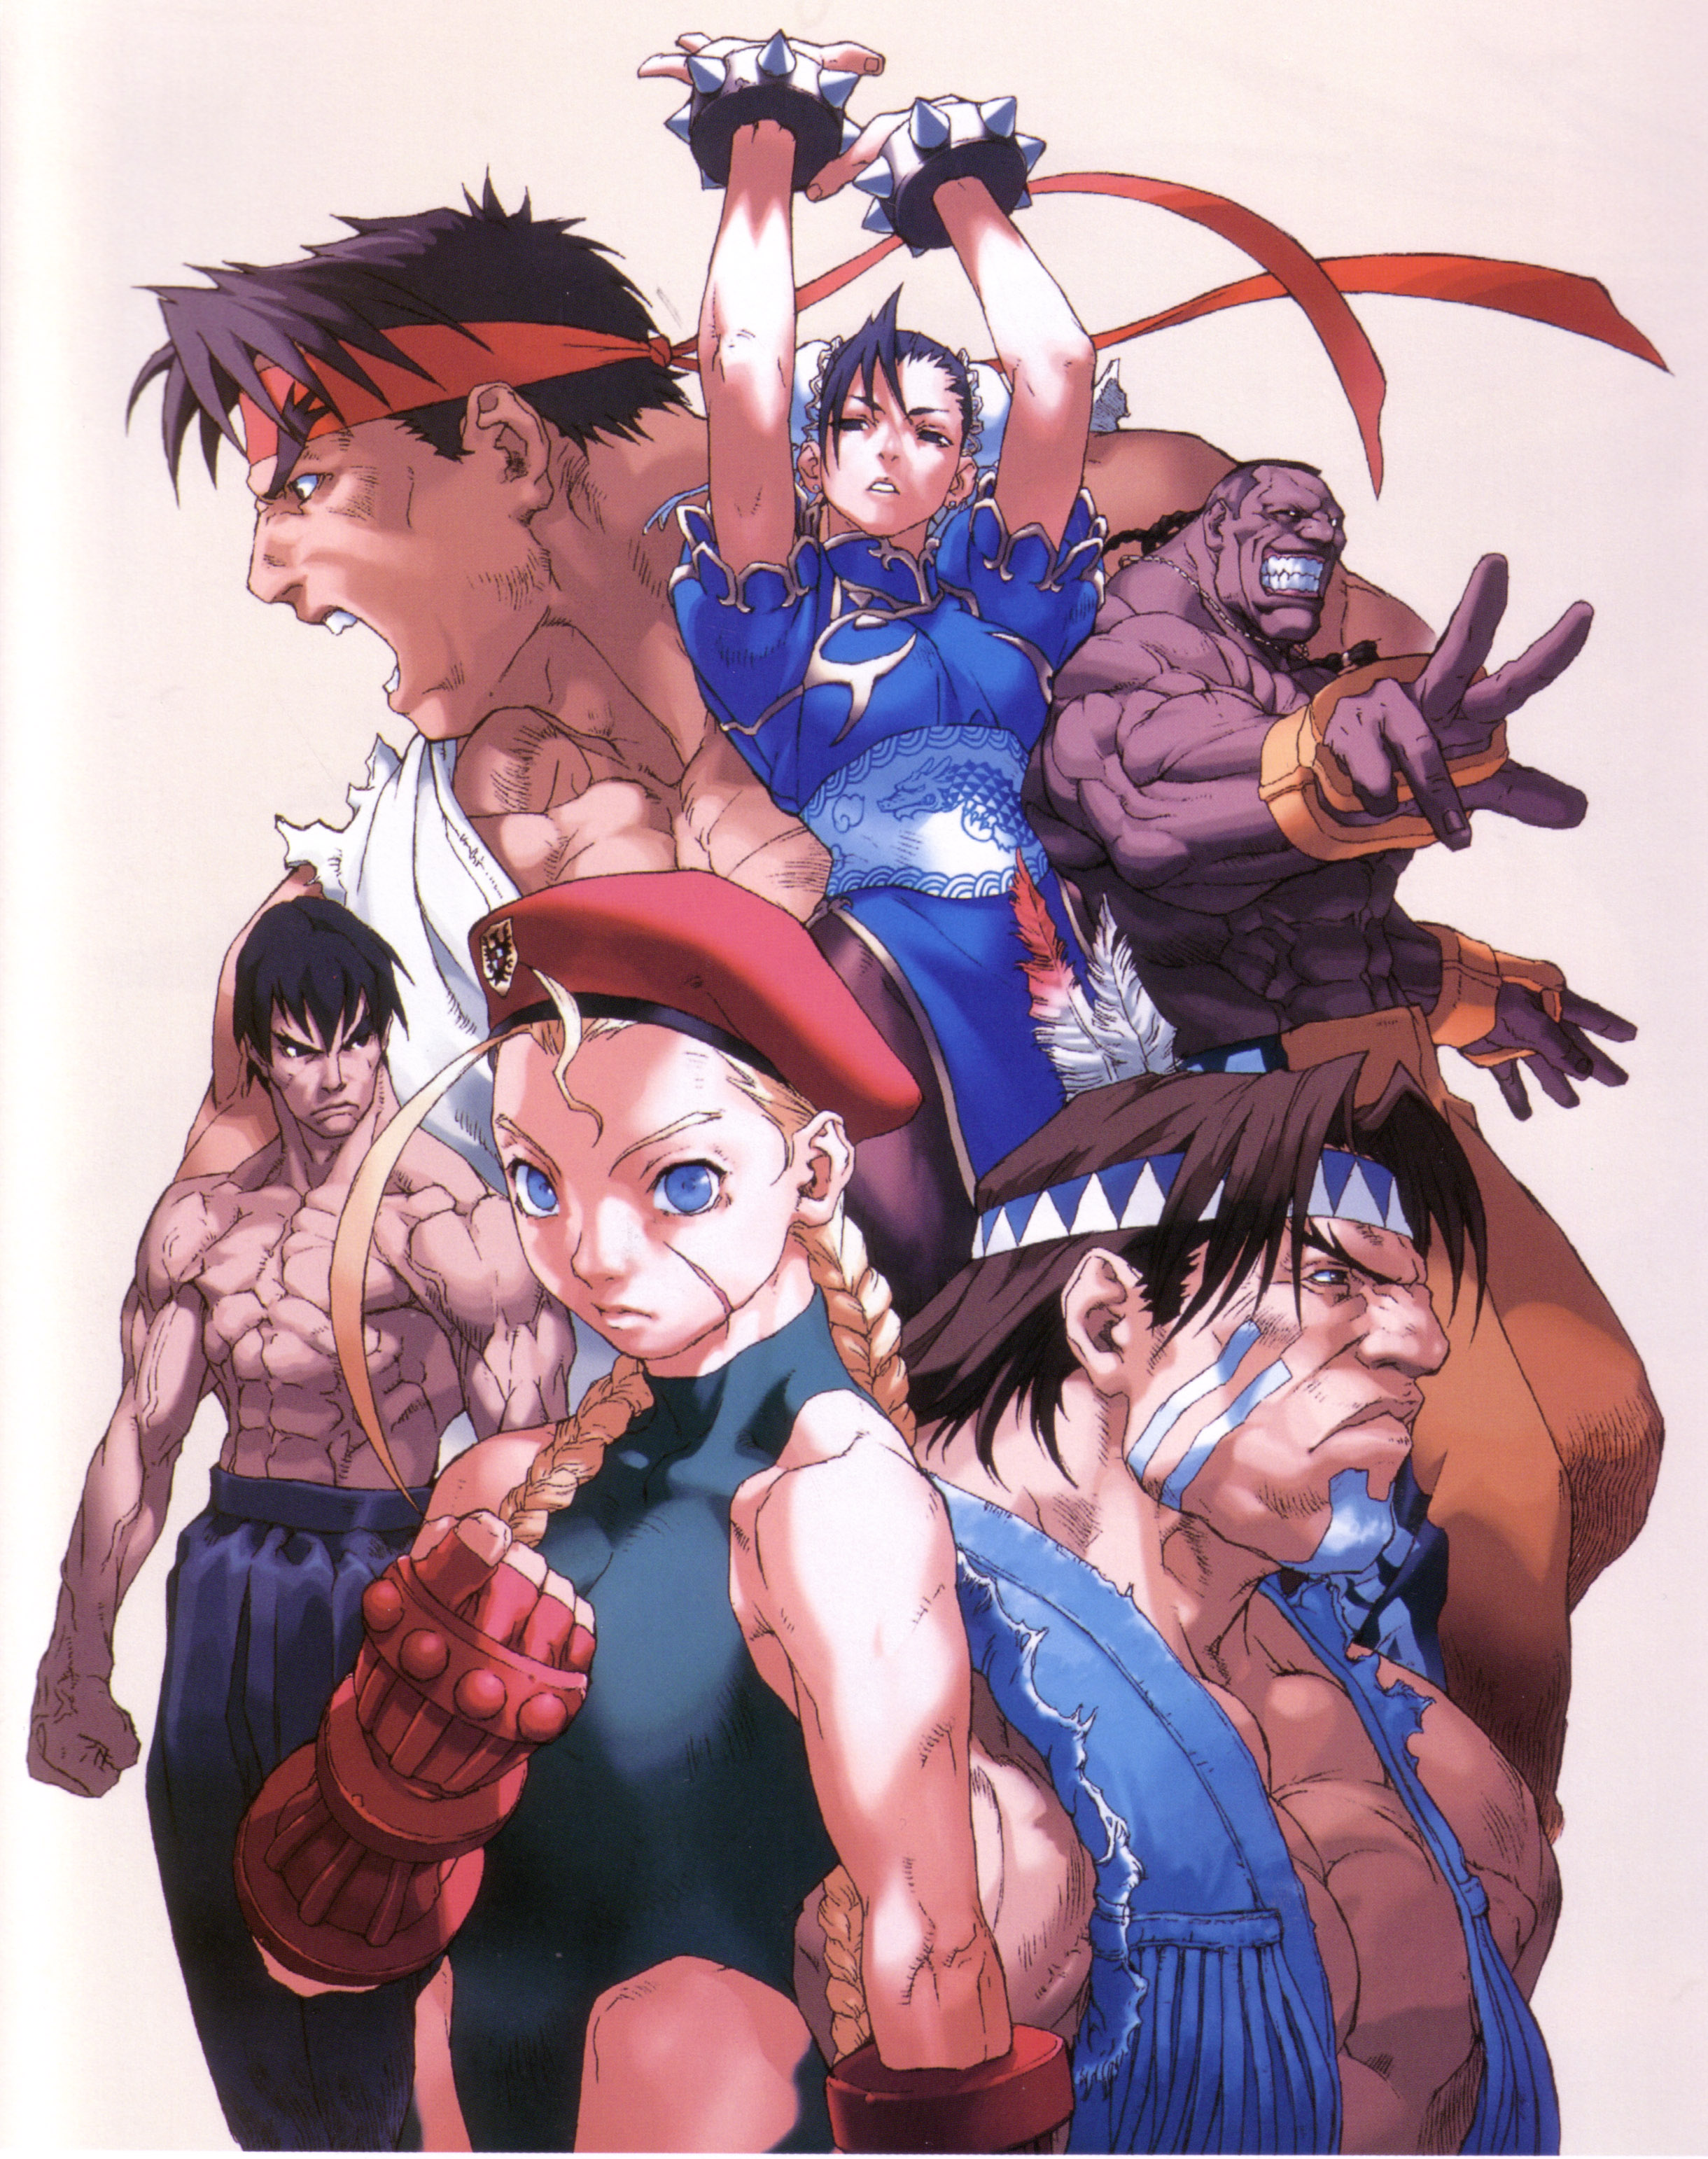 Street Fighter, Cammy, Рю, Chun-Li, Т. Хоук - обои на рабочий стол